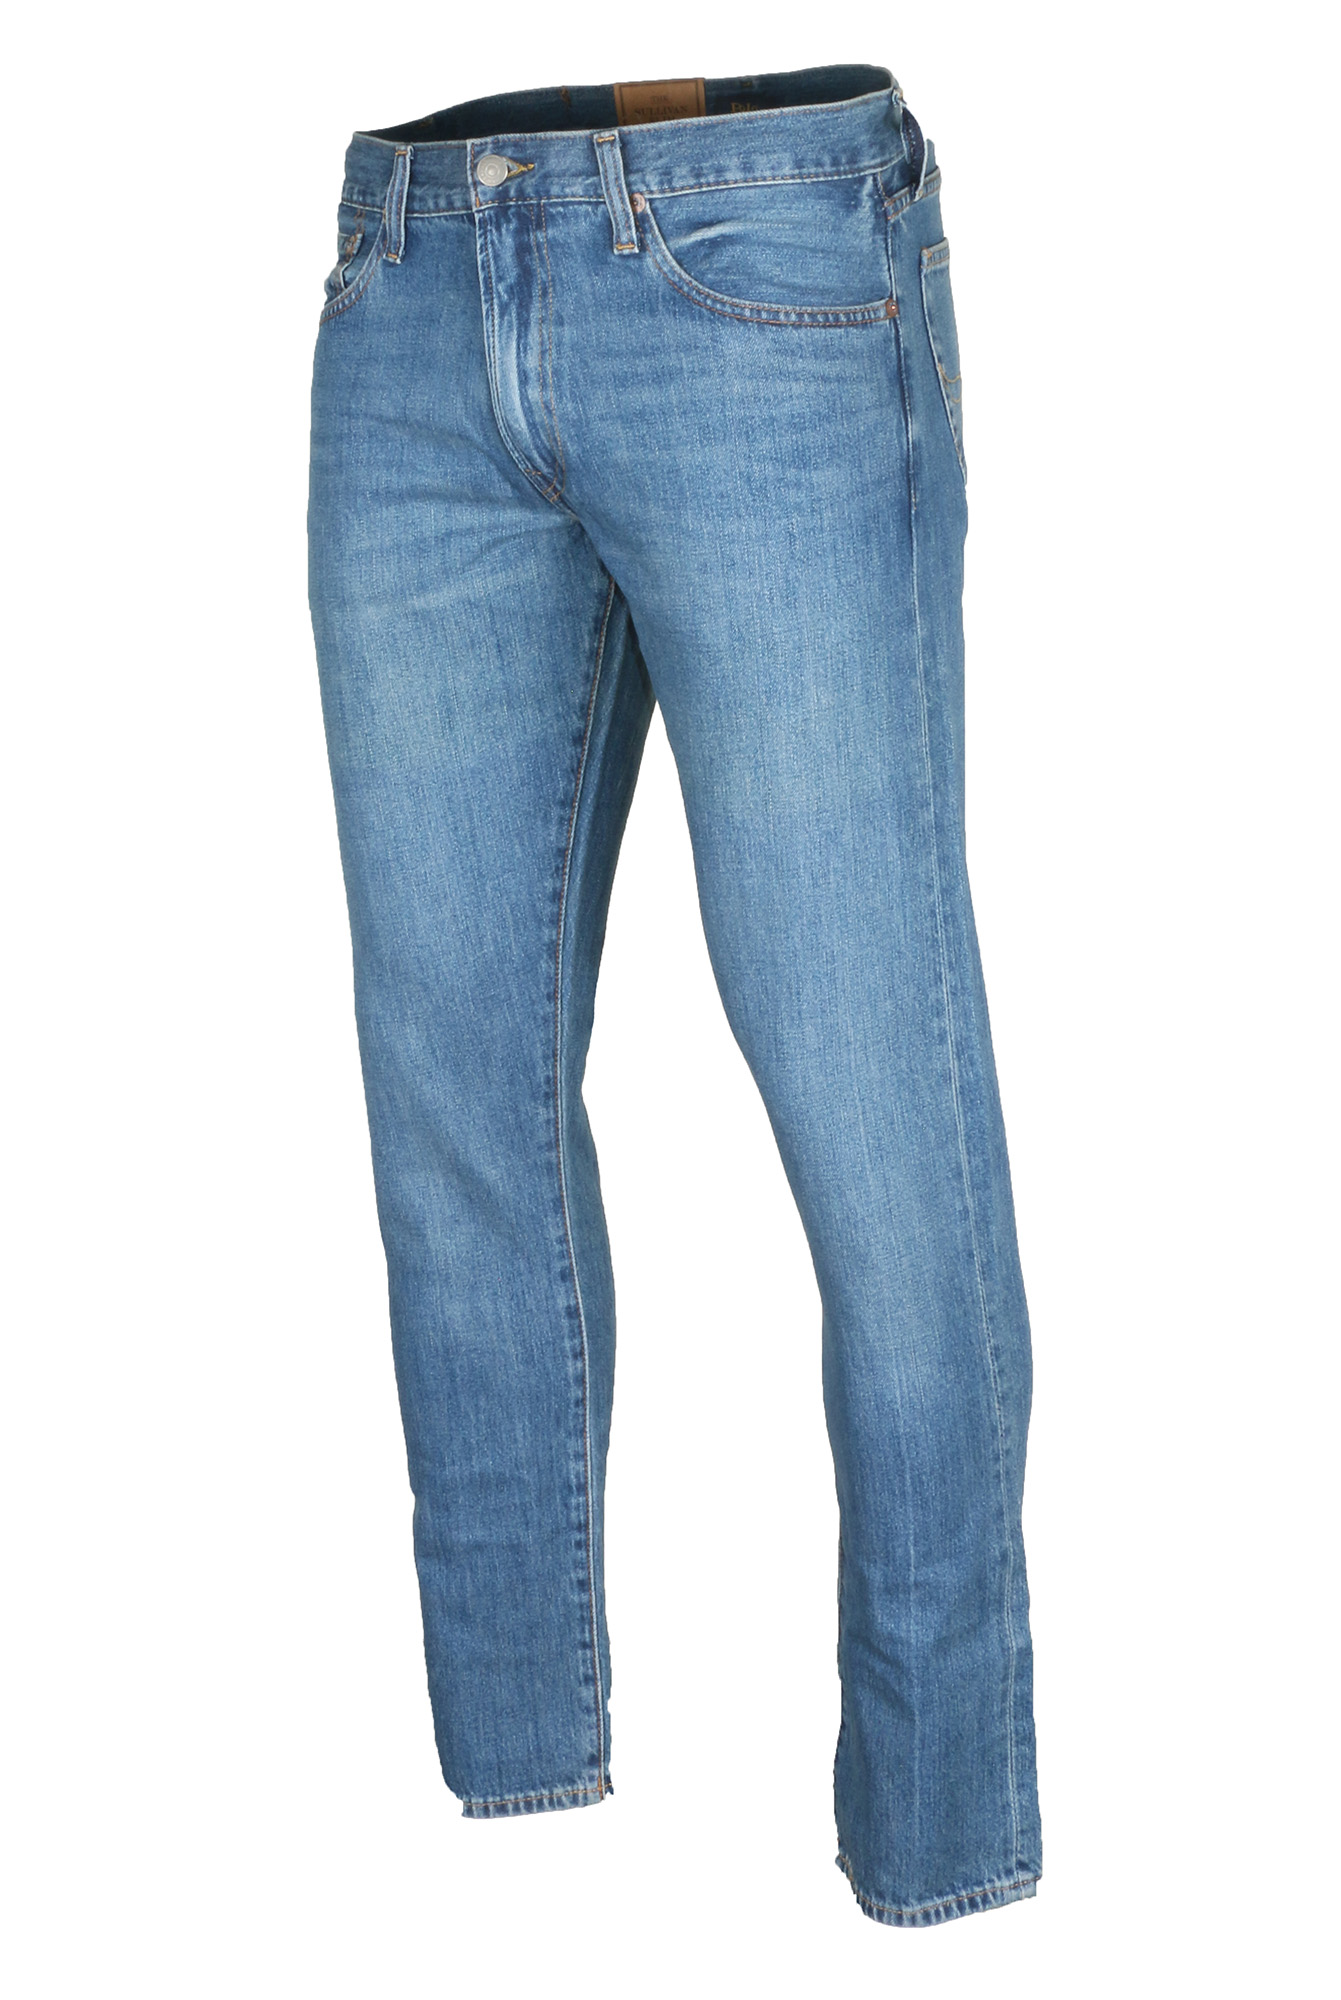 Polo RL Slim Denim Jeans (Med Blue, Walmart.com